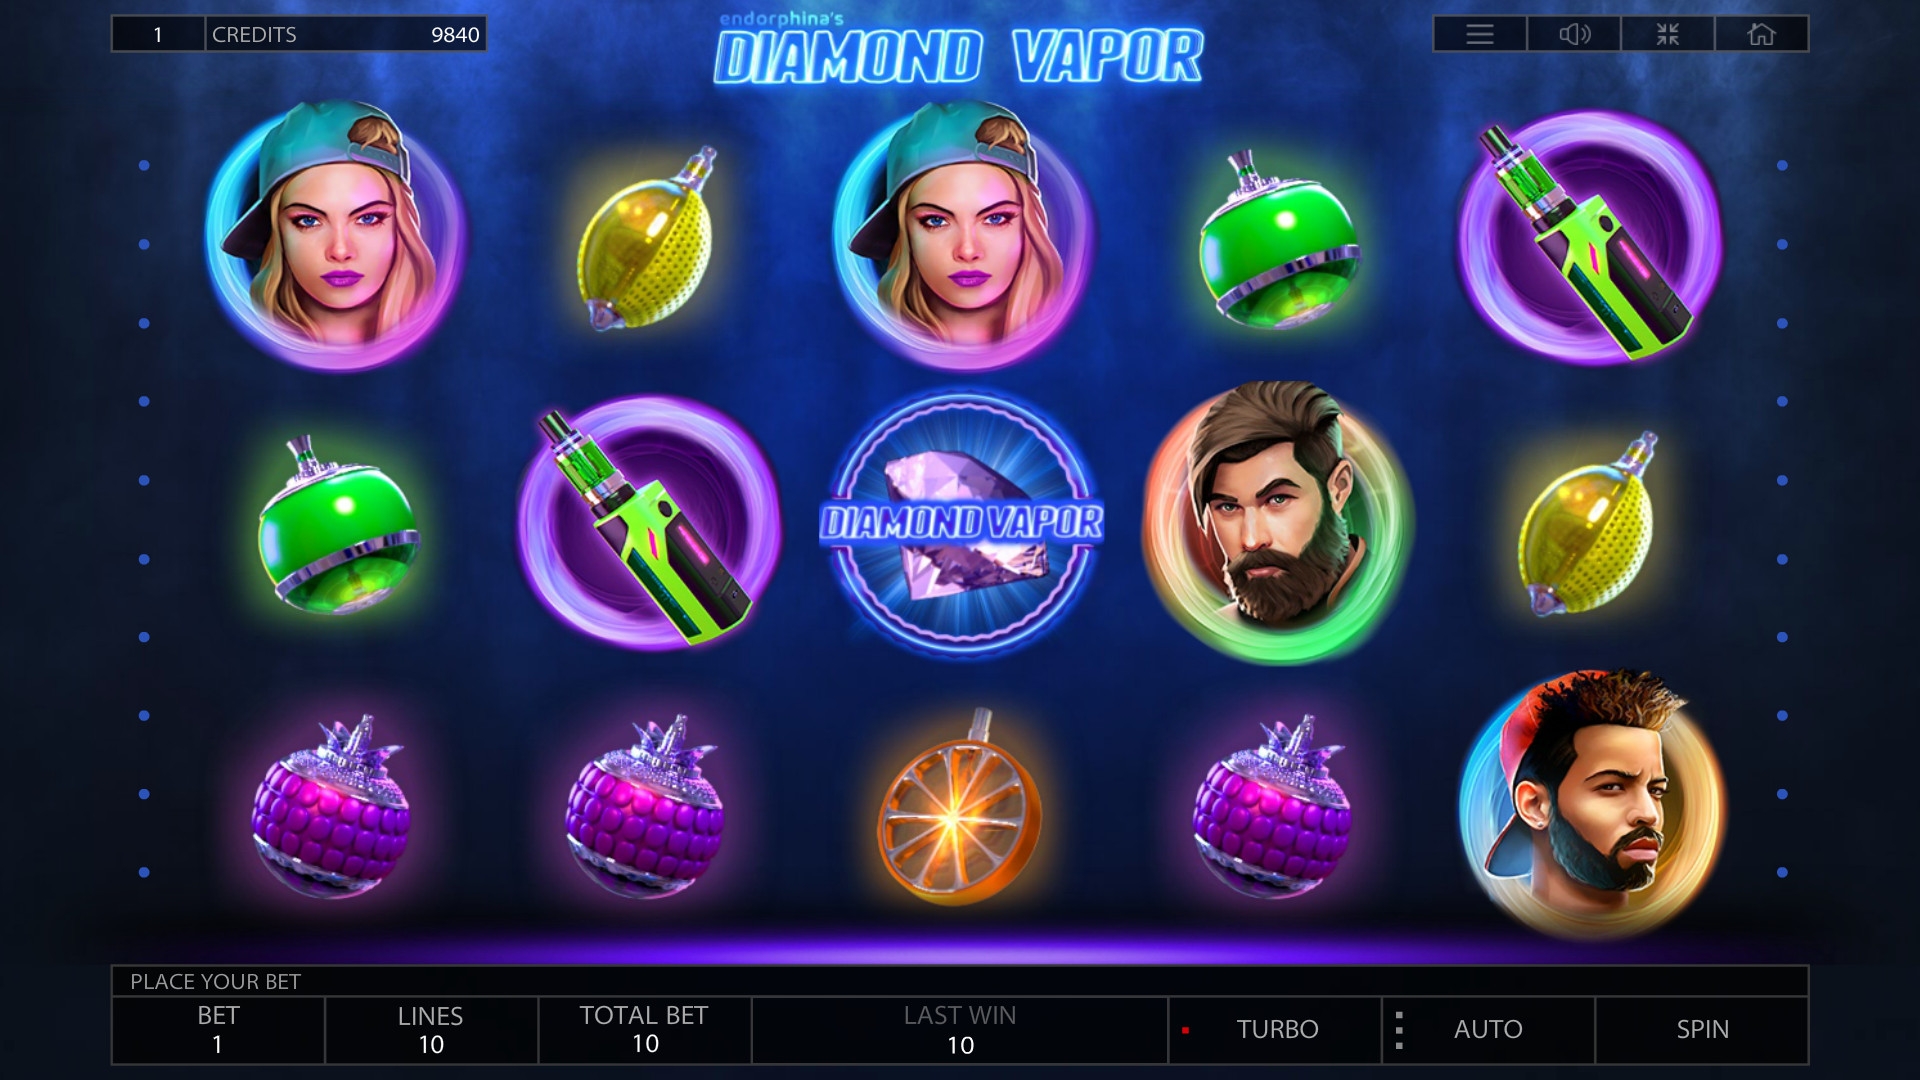 Diamond Vapor (Diamond Vapor) from category Slots